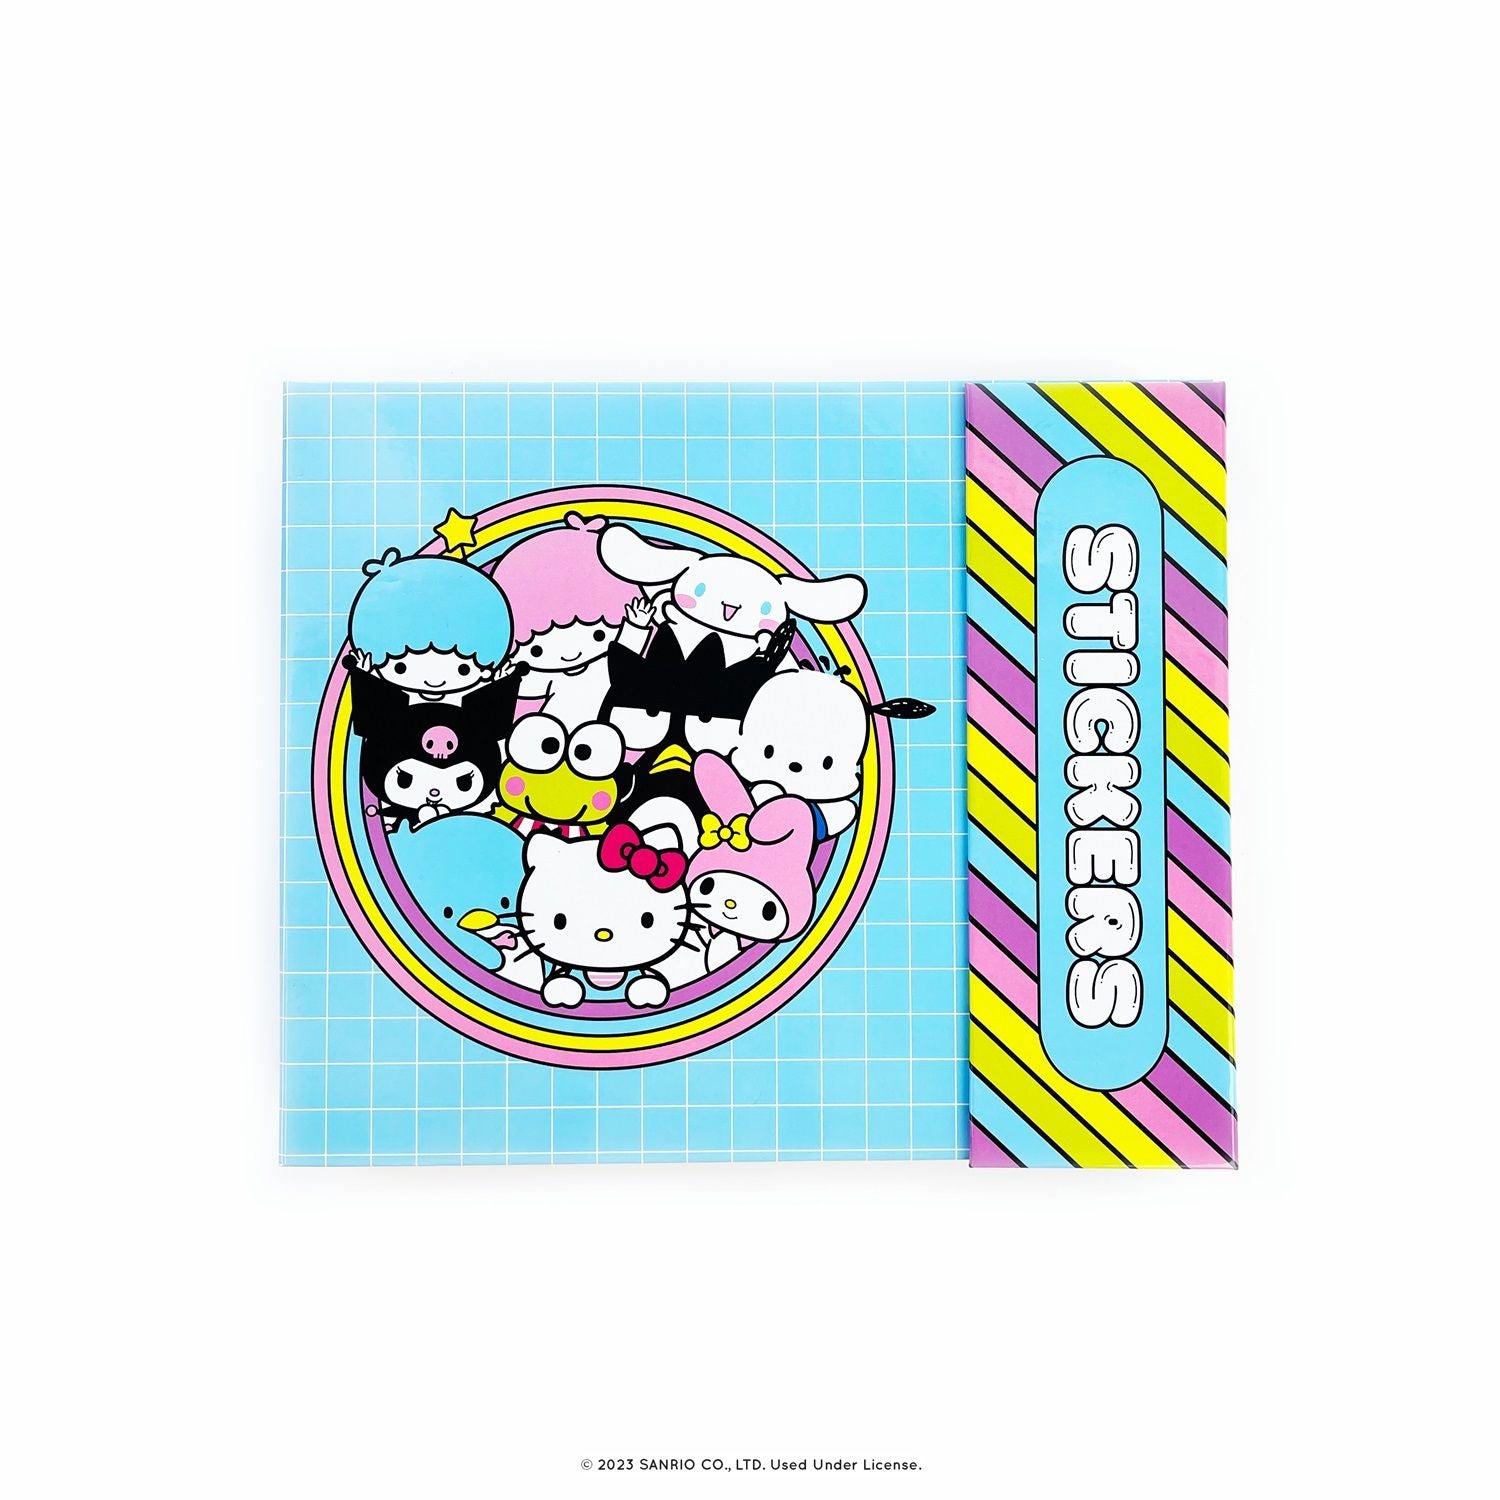 Hello Kitty And Friends x Pipsticks Mini Christmas Stocking Sticker Sh